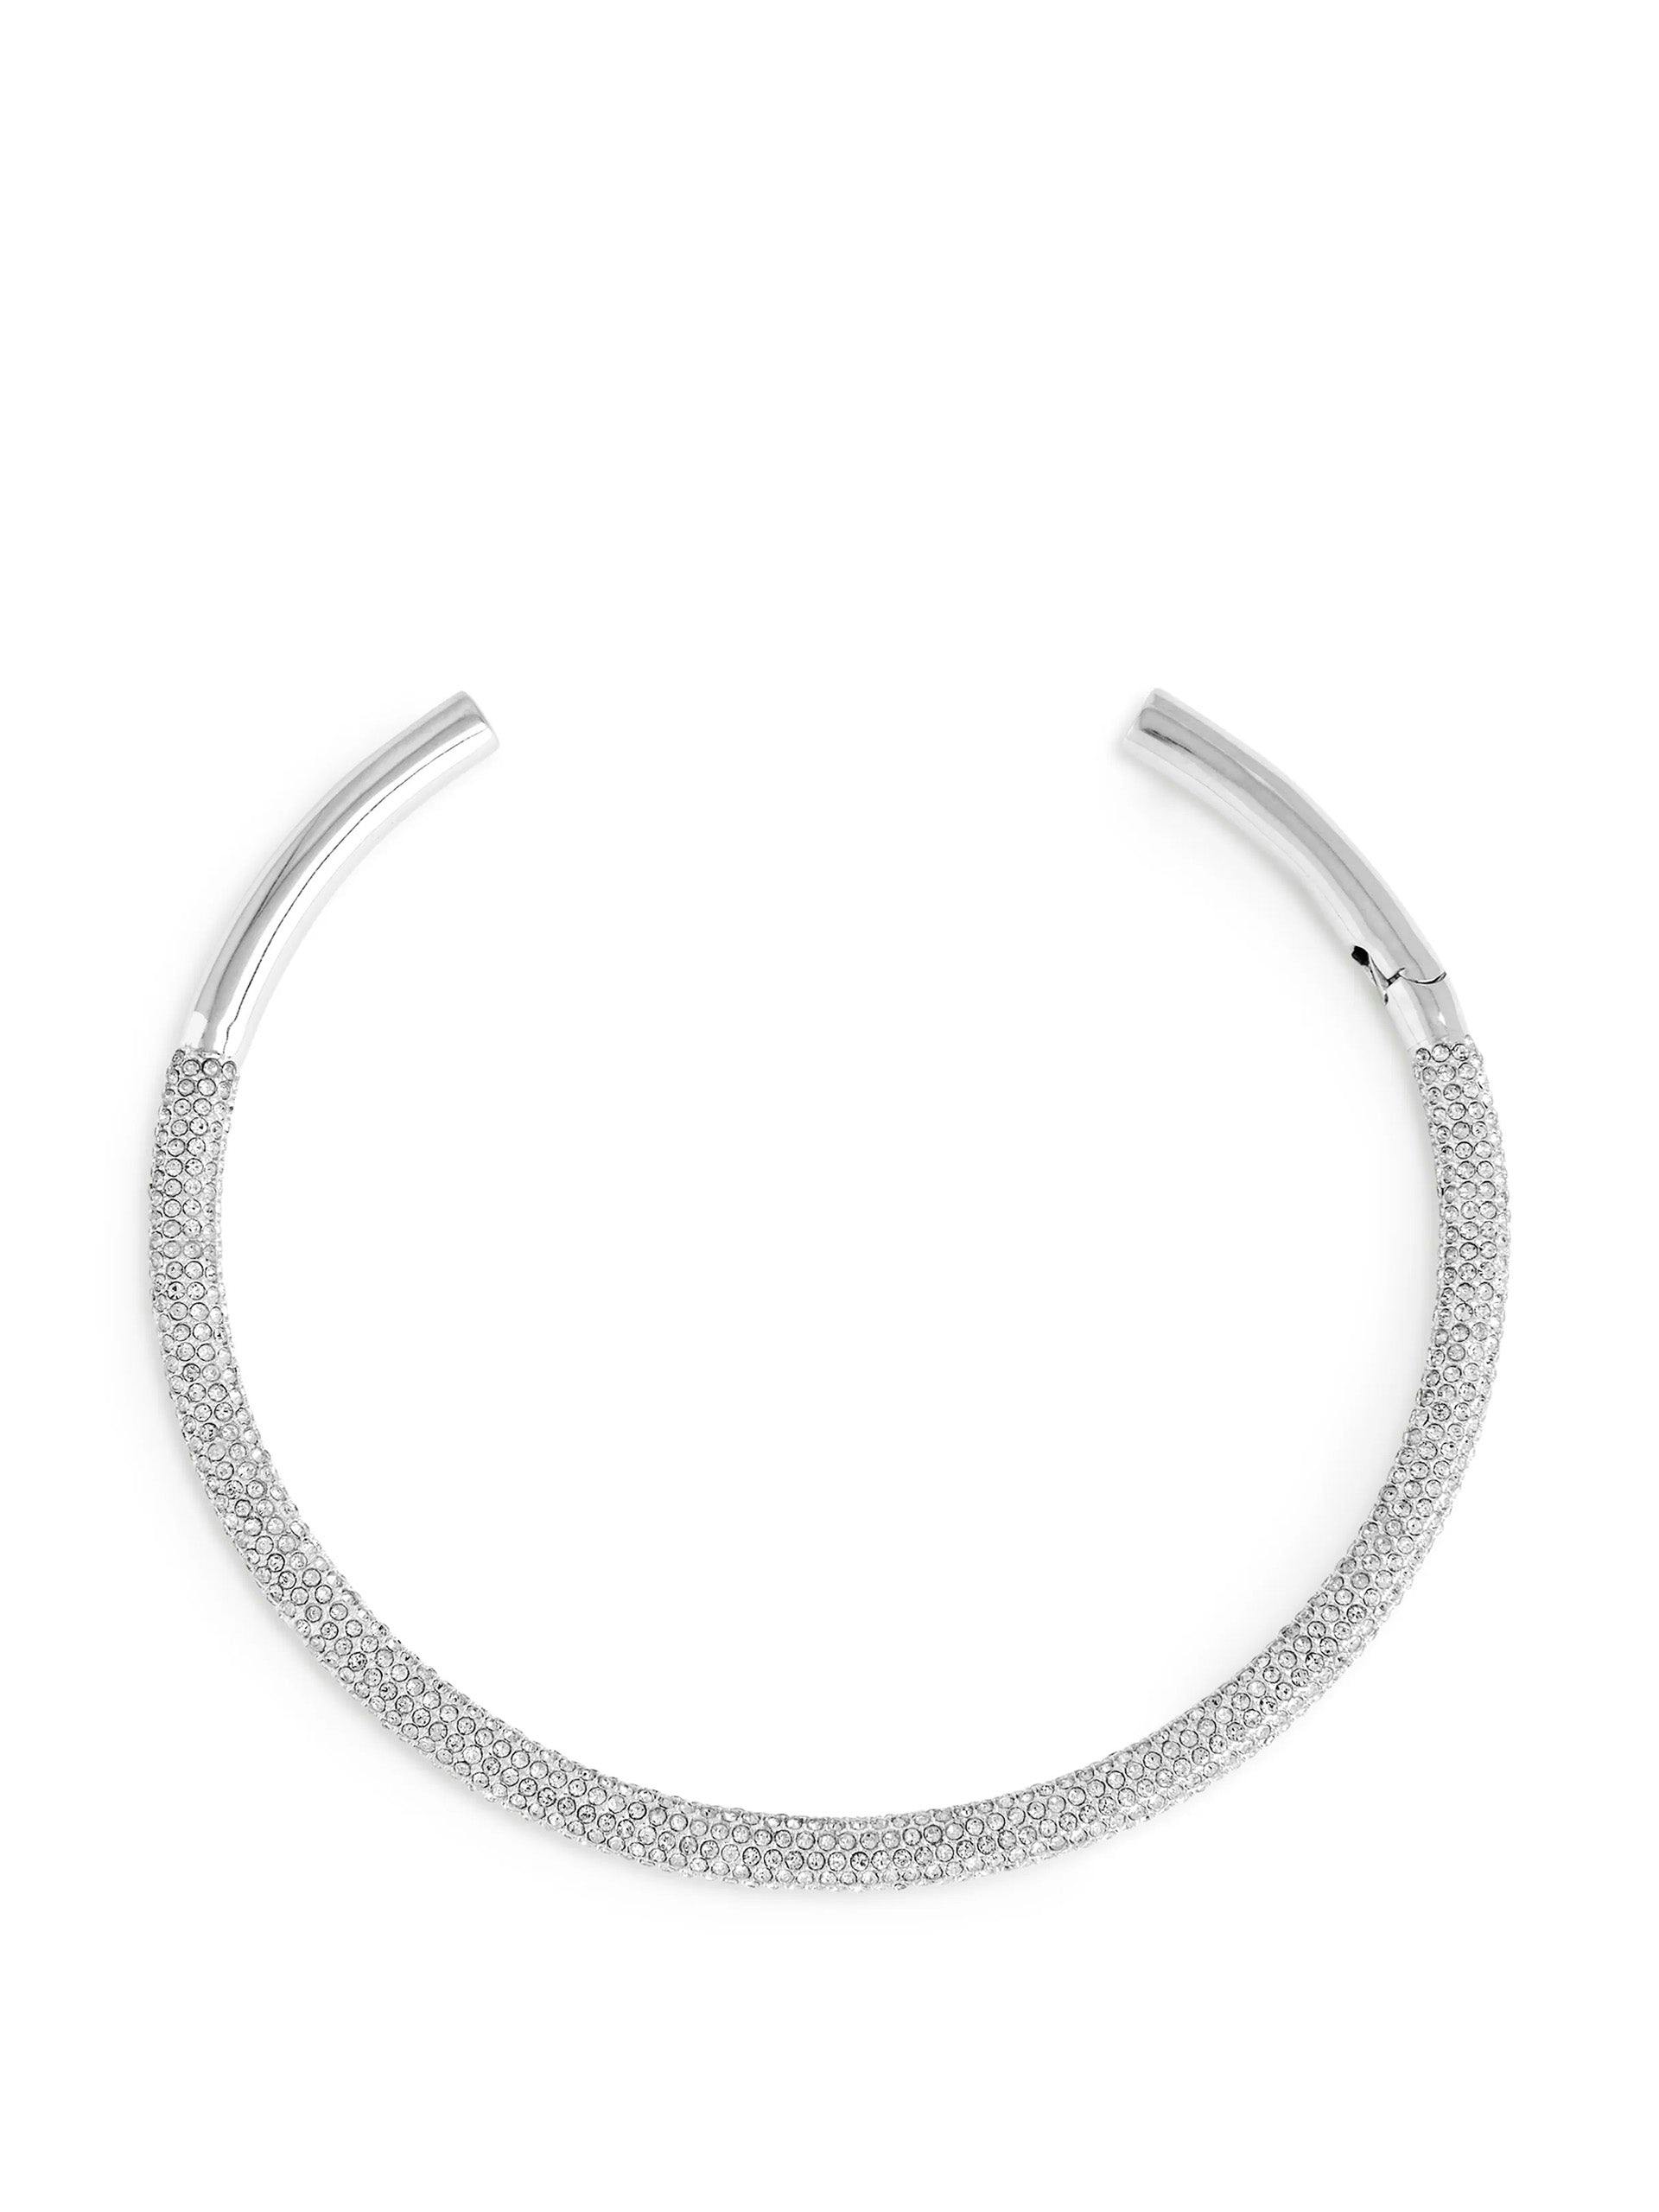 Rhinestone cuff necklace